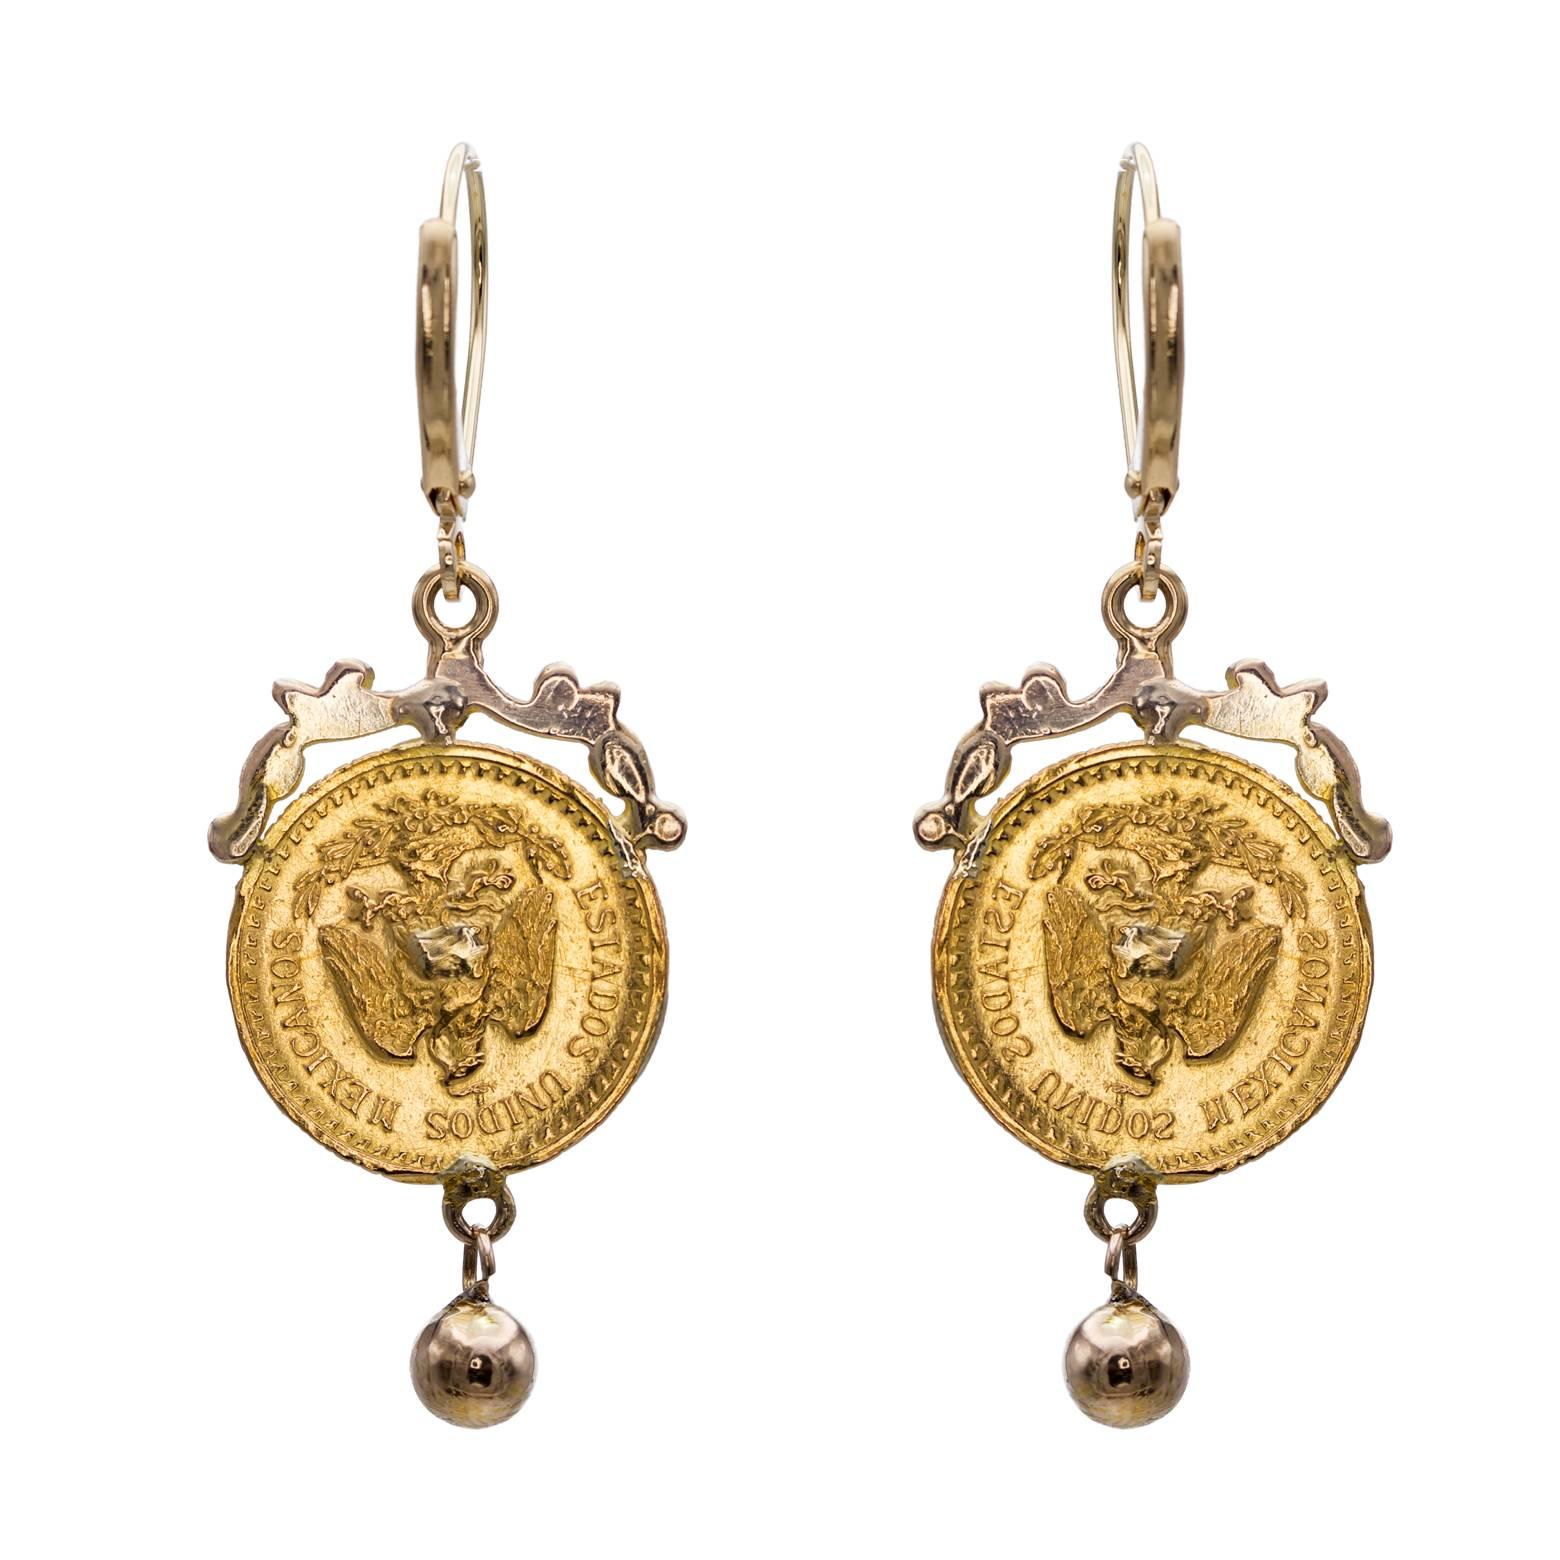 Contemporary 22 Karat Gold Coin Drop Earrings with 14 Karat Gold Embellishment